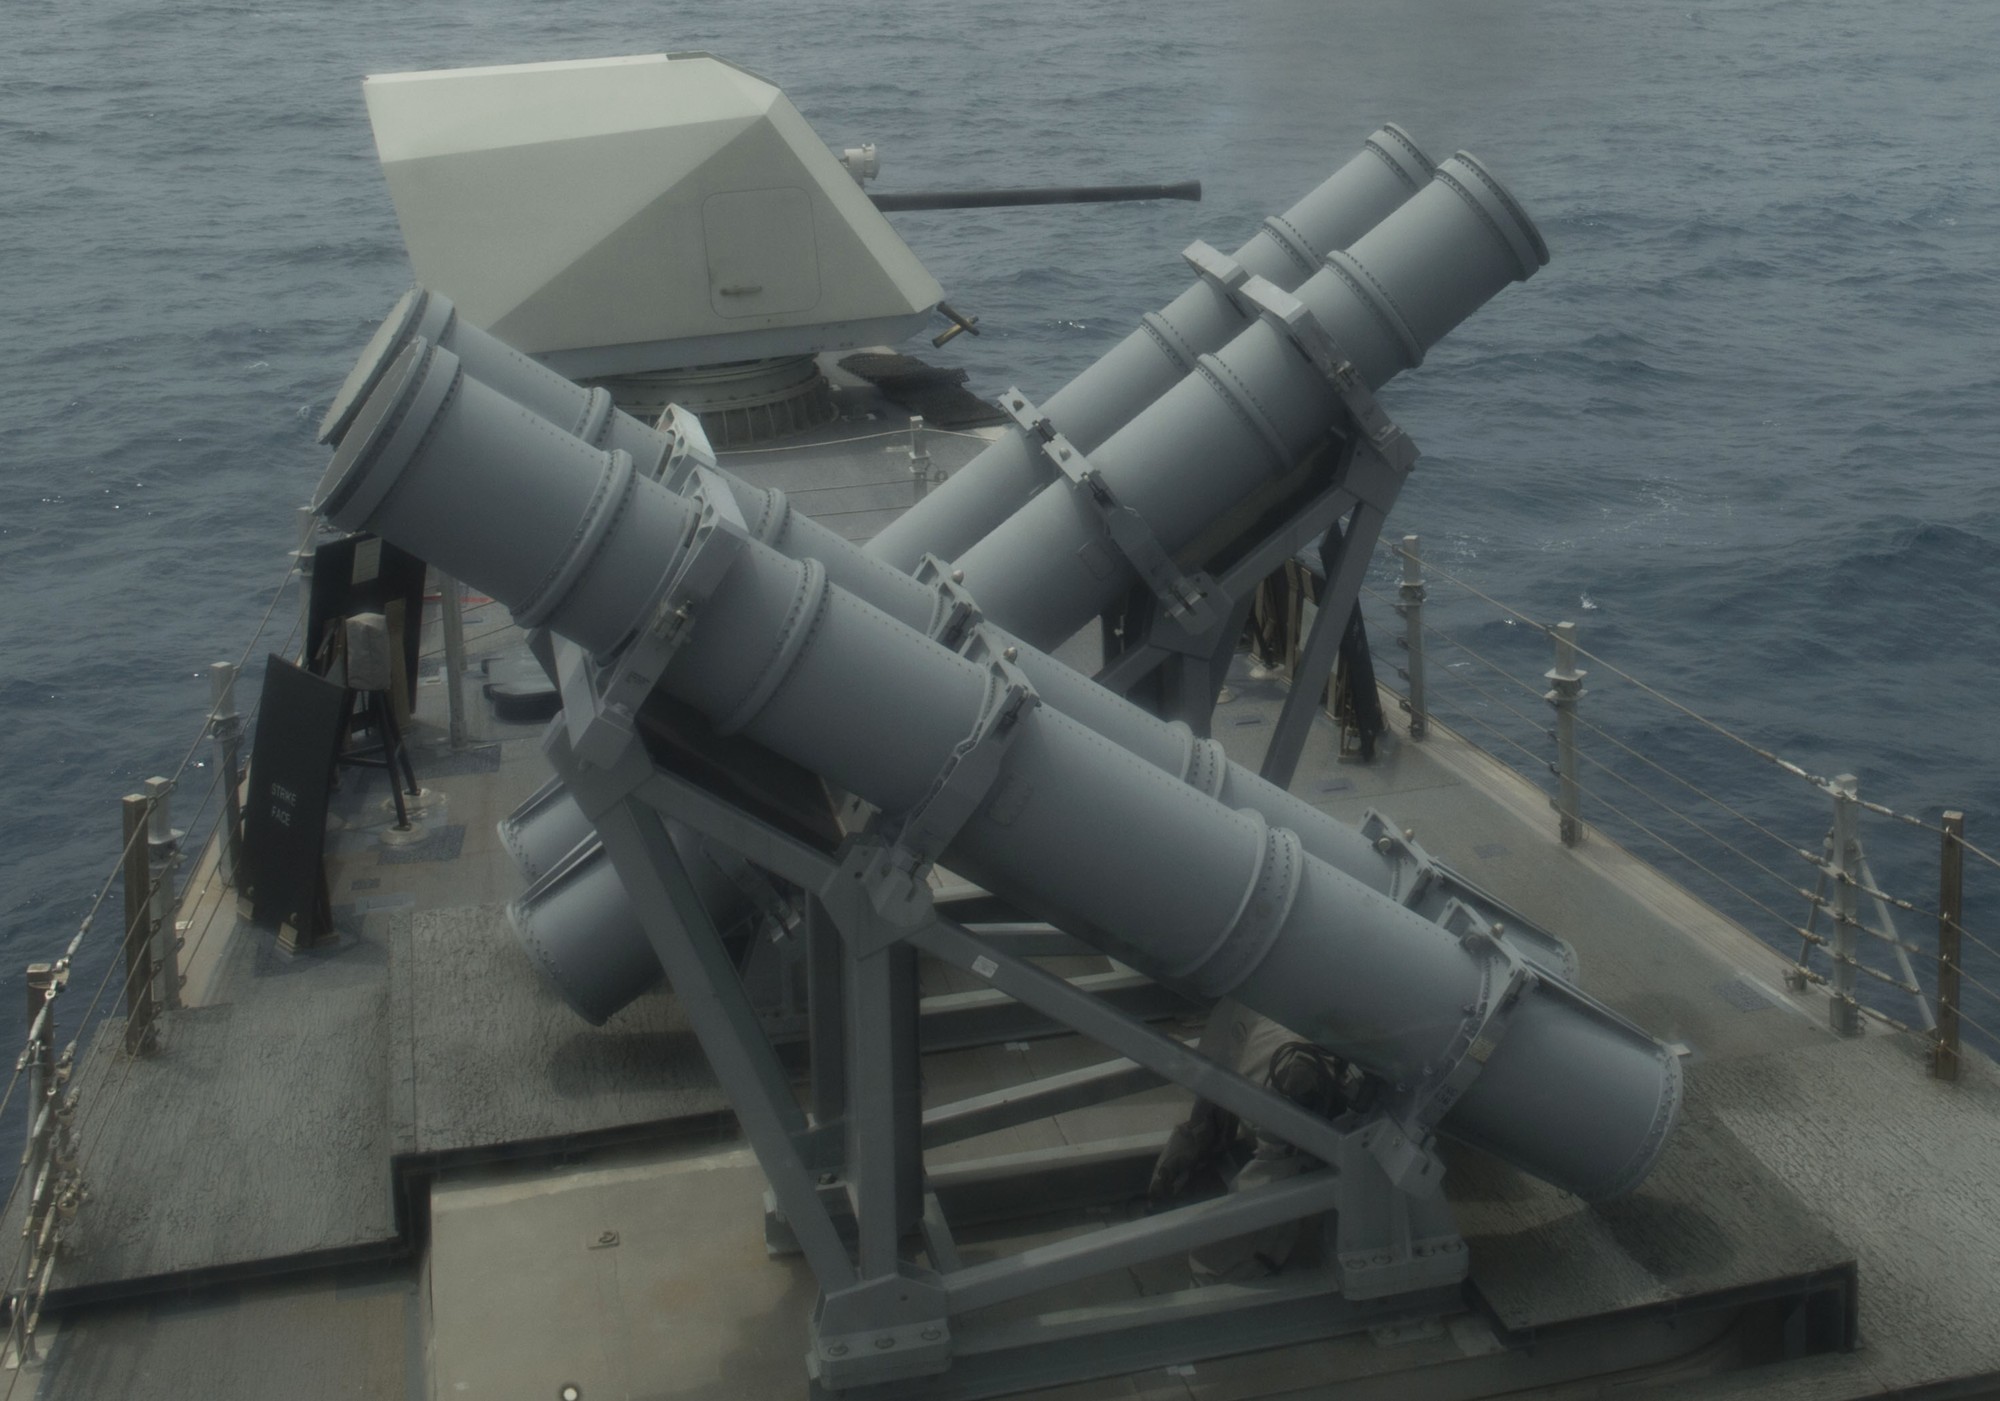 lcs-4 uss coronado independence class littoral combat ship us navy 16 mk.110 57mm gun fire exercise